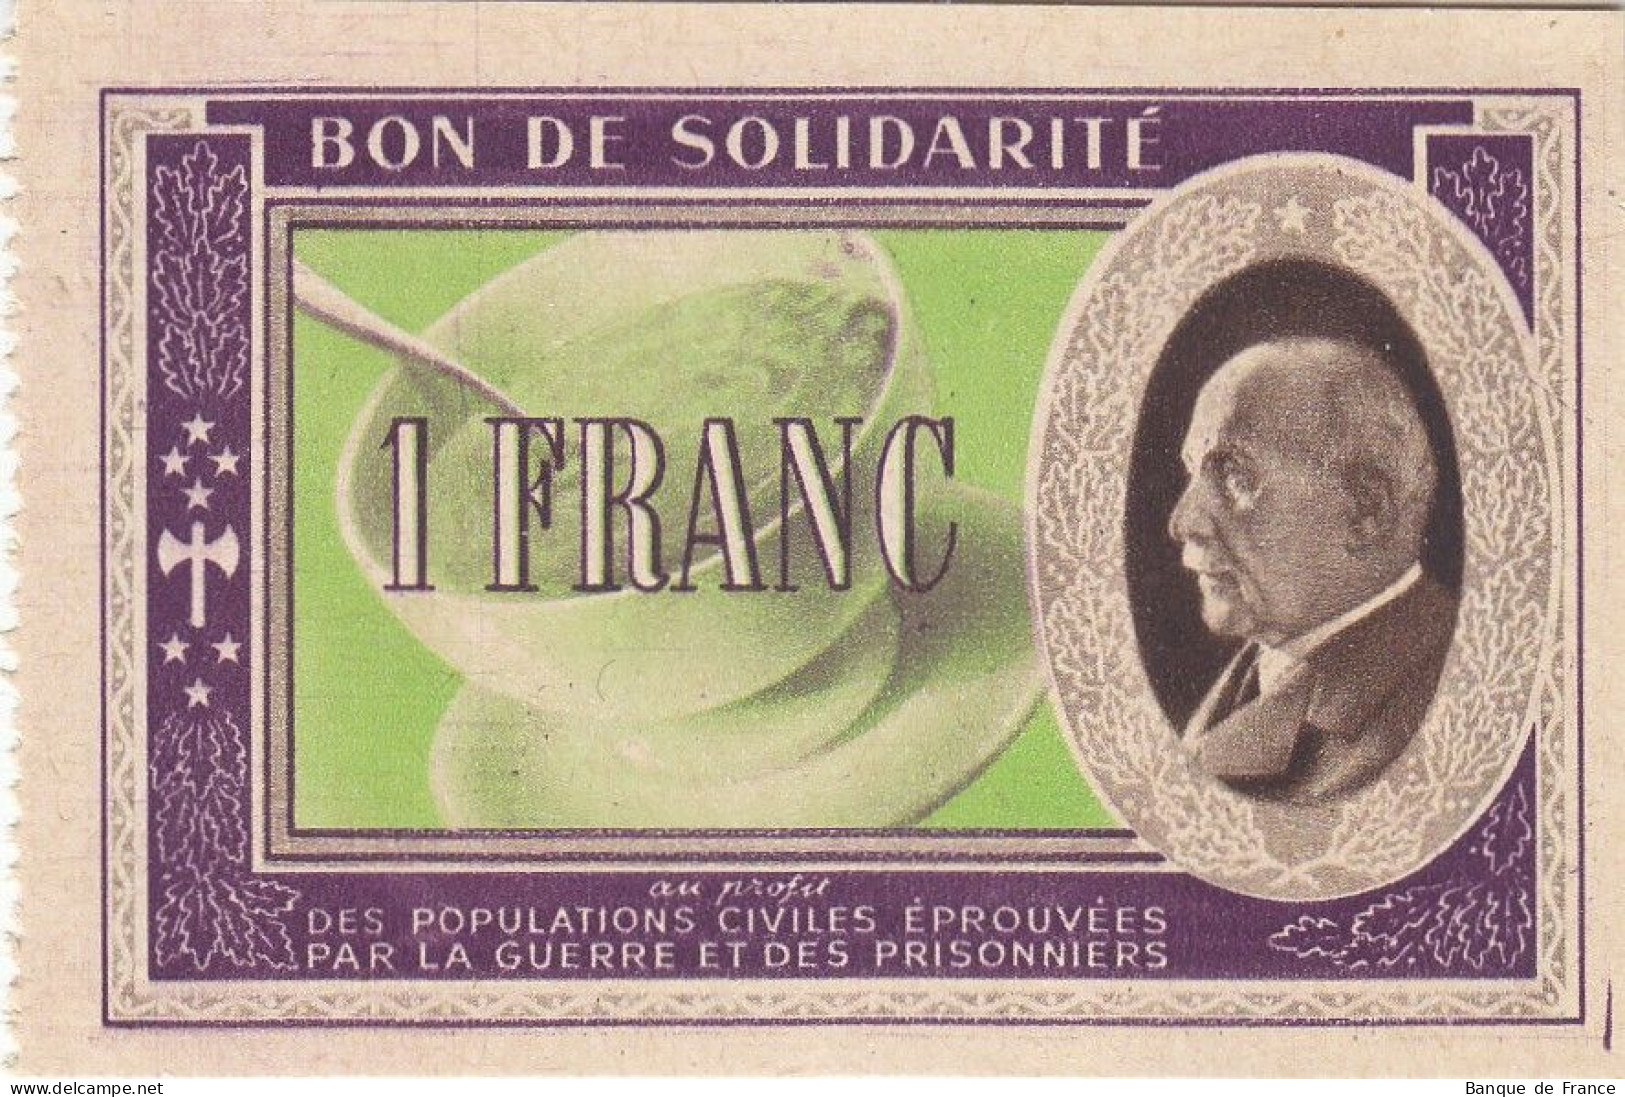 Bon De Solidarité France 1 Franc - Pétain 1941 / 1942 KL.02 - Notgeld